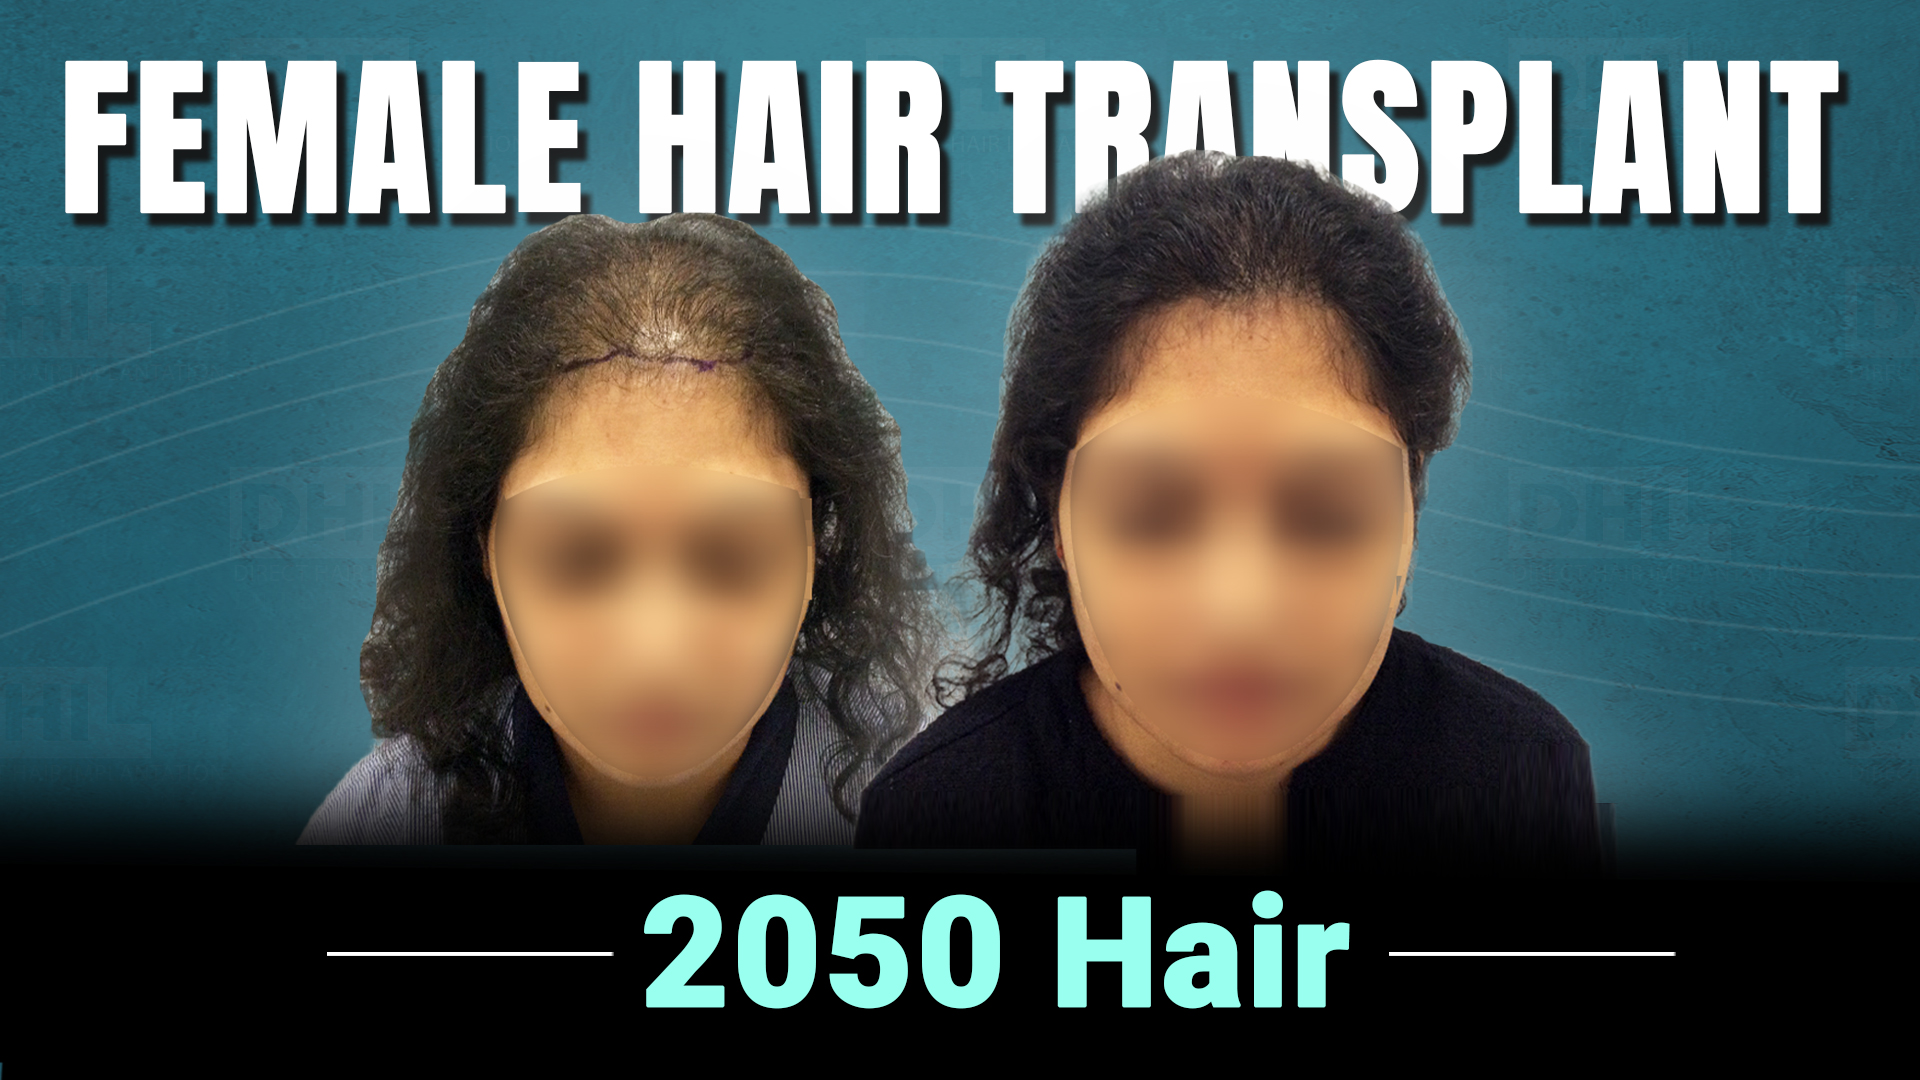 hair transplant video 1